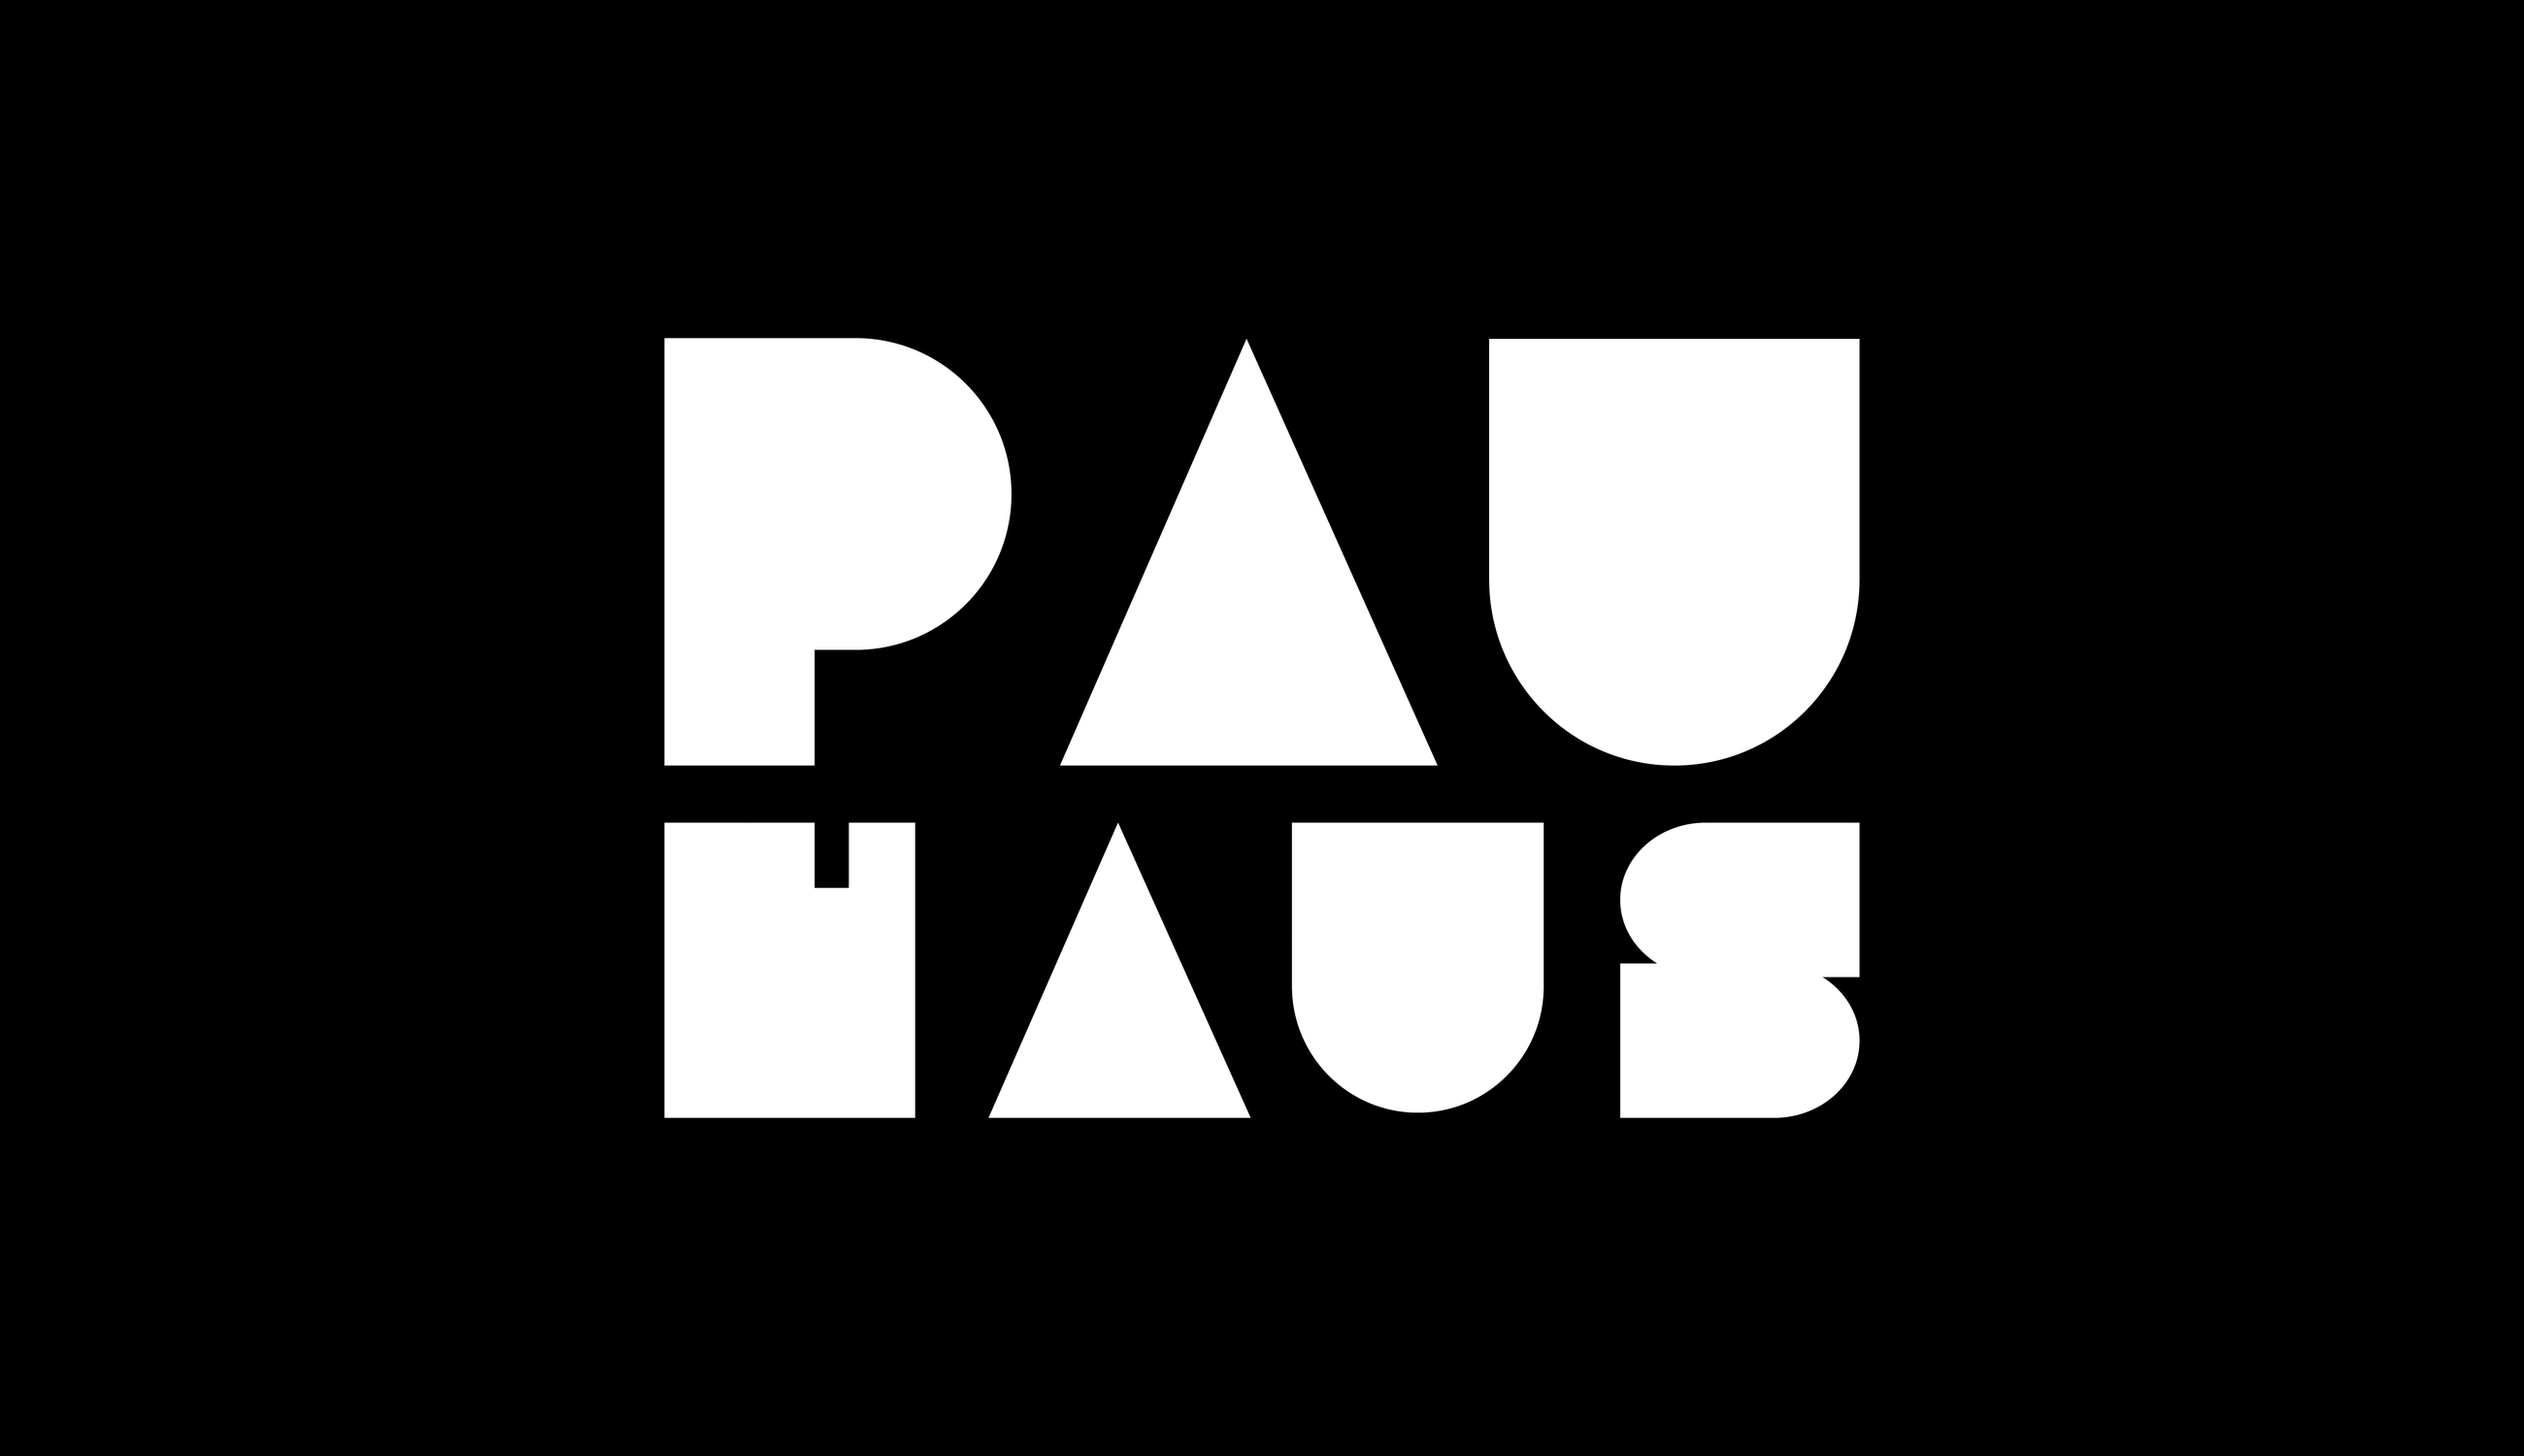 PAUERHAUS Workshops - Pauhaus Gallery